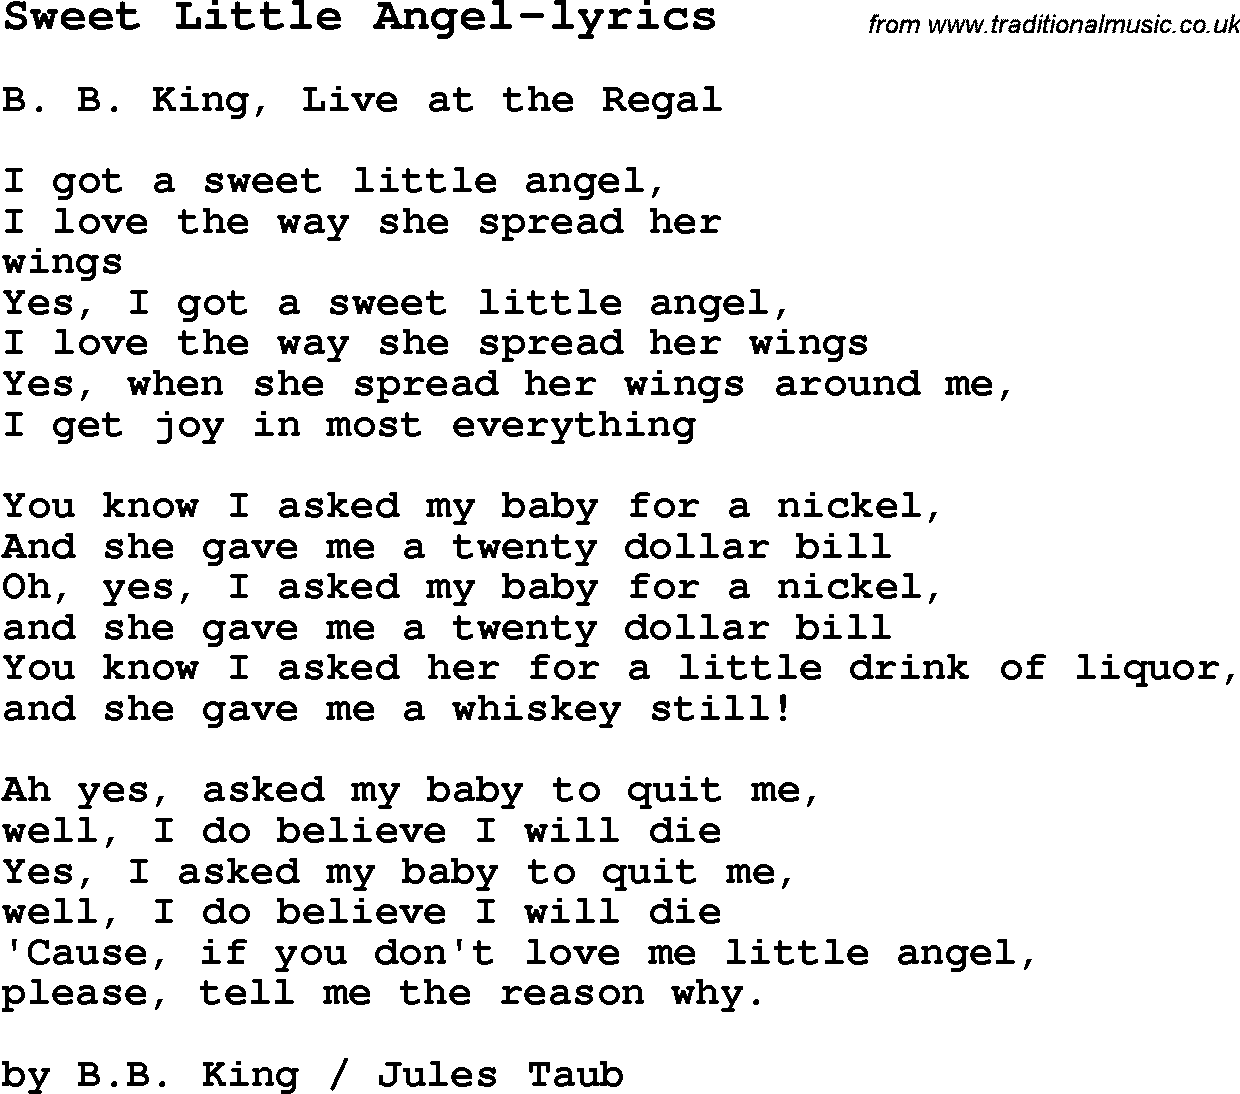 Blues Guitar Song, lyrics, chords, tablature, playing hints for Sweet Little Angel-lyrics